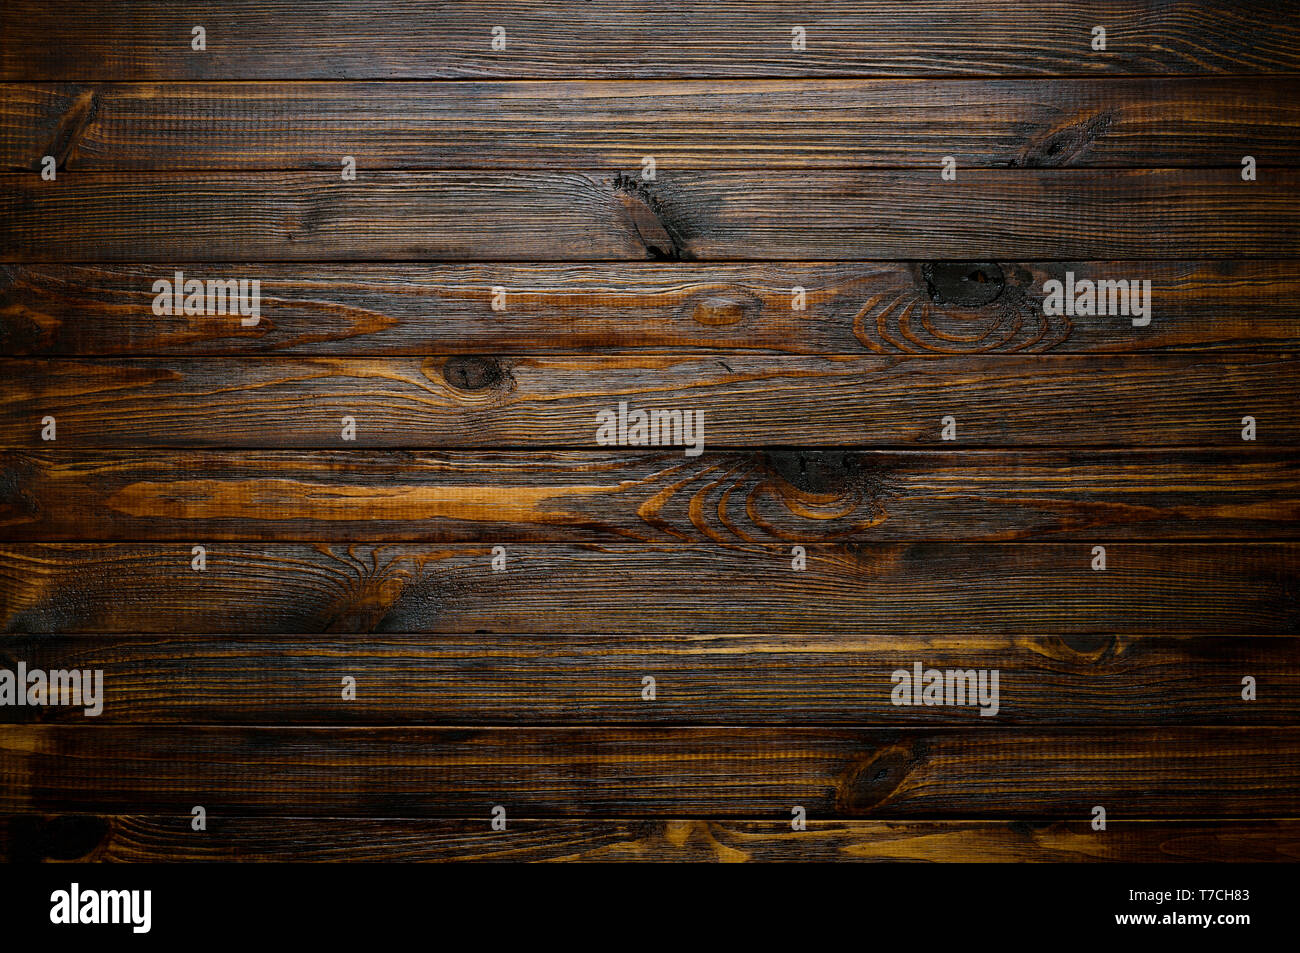 Textura de madera natural. Fondo de madera. Negra tablones rústica mesa plana vista laical. Foto de stock